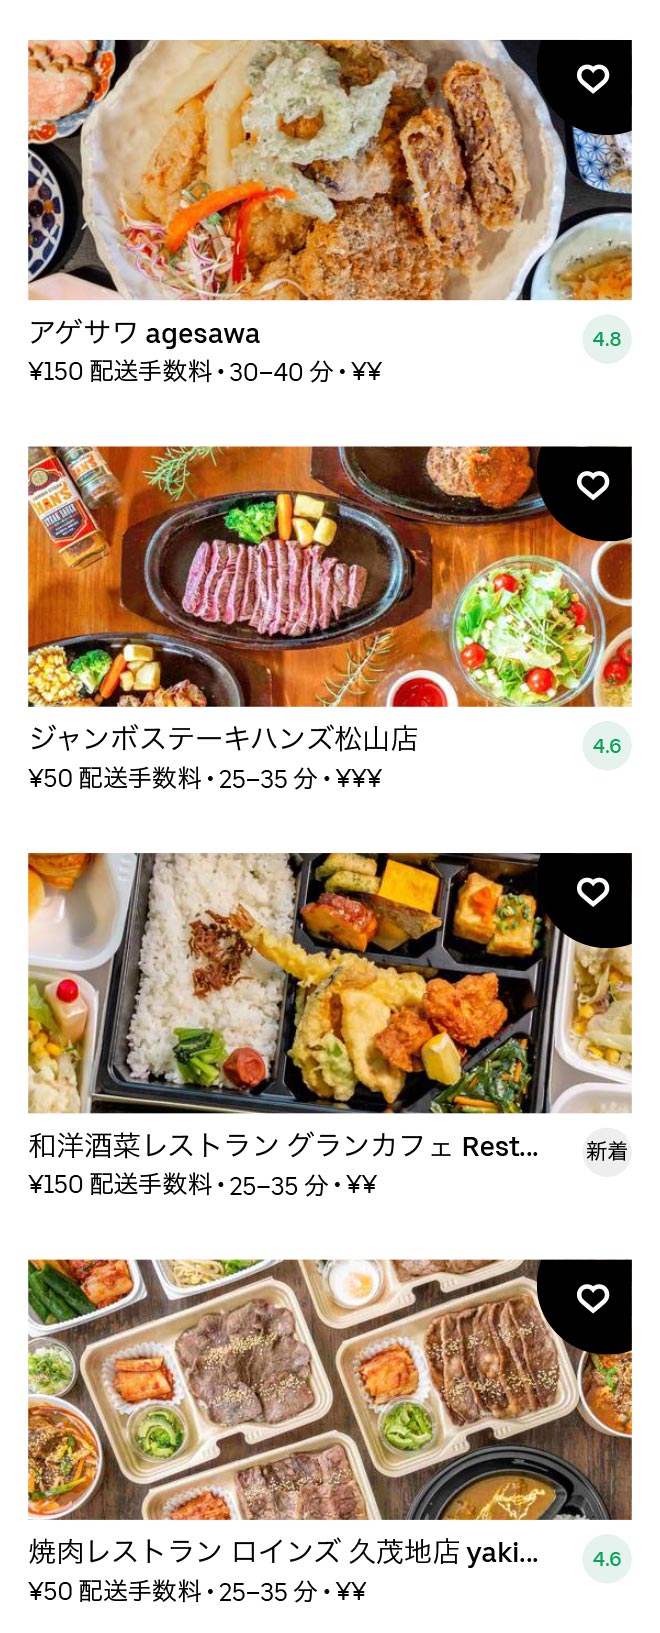 Omoromachi menu 2011 13